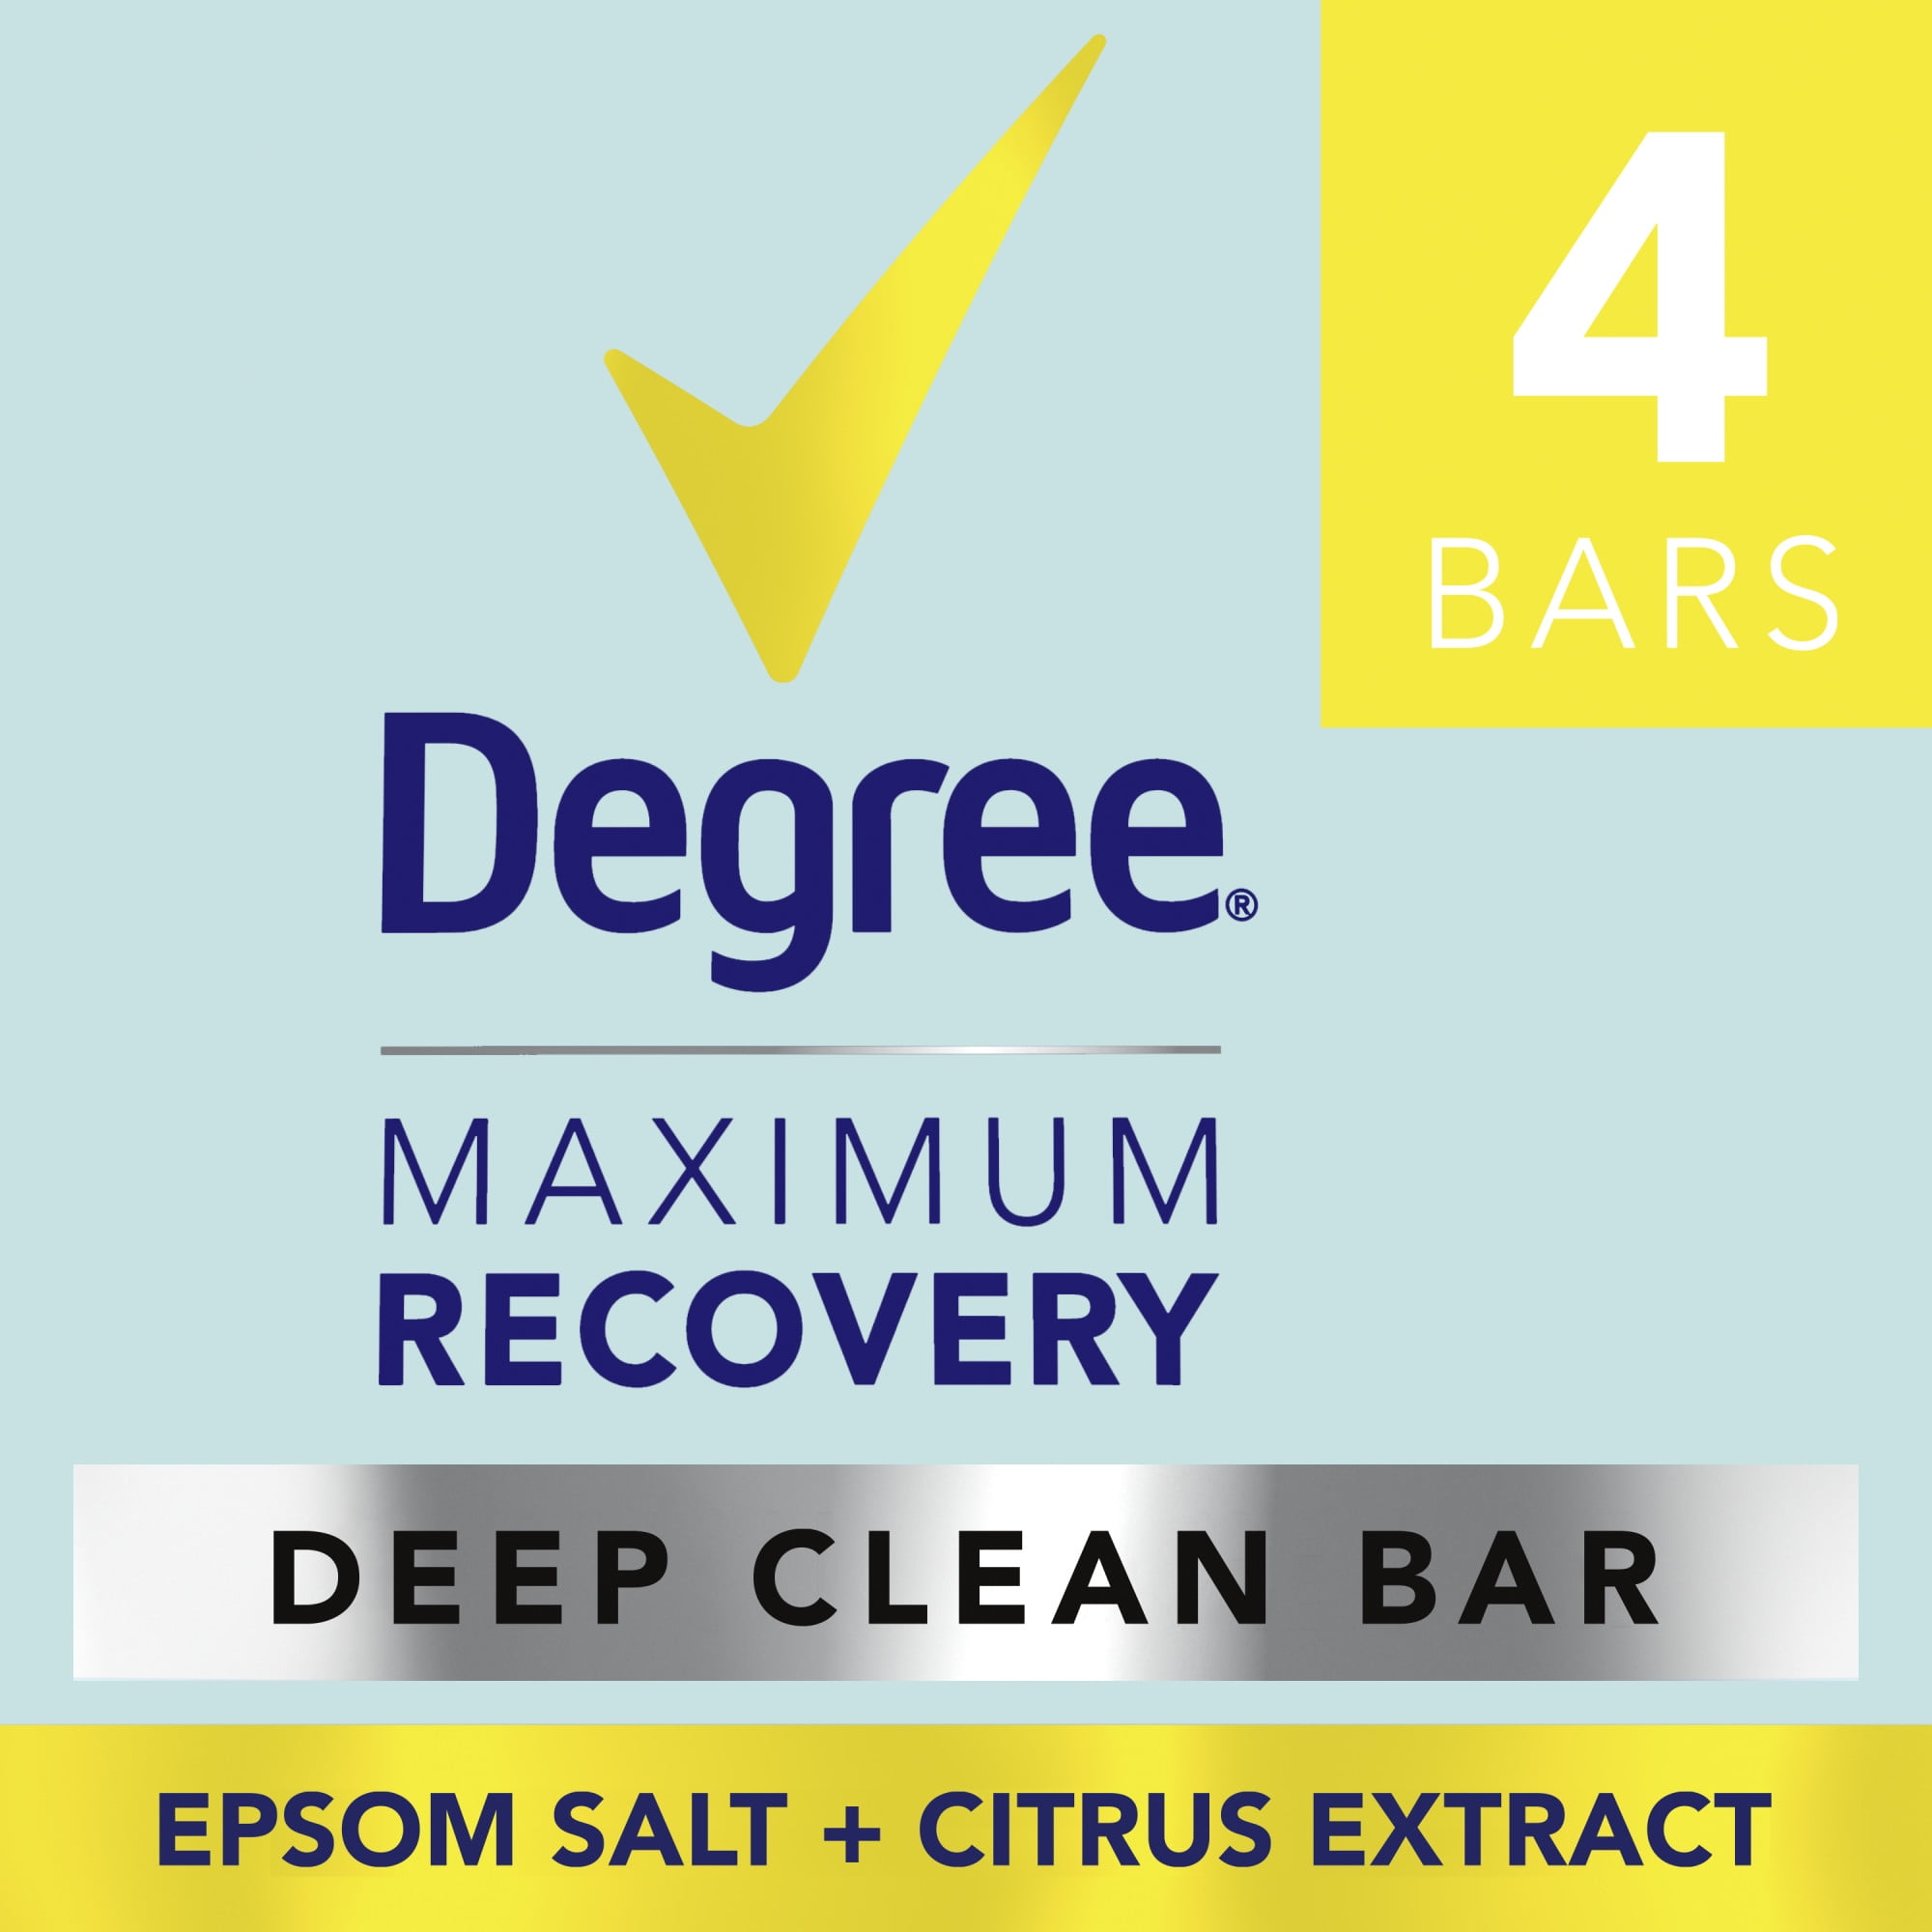 Degree Men Maximum Recovery Deep Clean Soap Bar Ginger Extract, 3.75 Oz., 4  Bars 